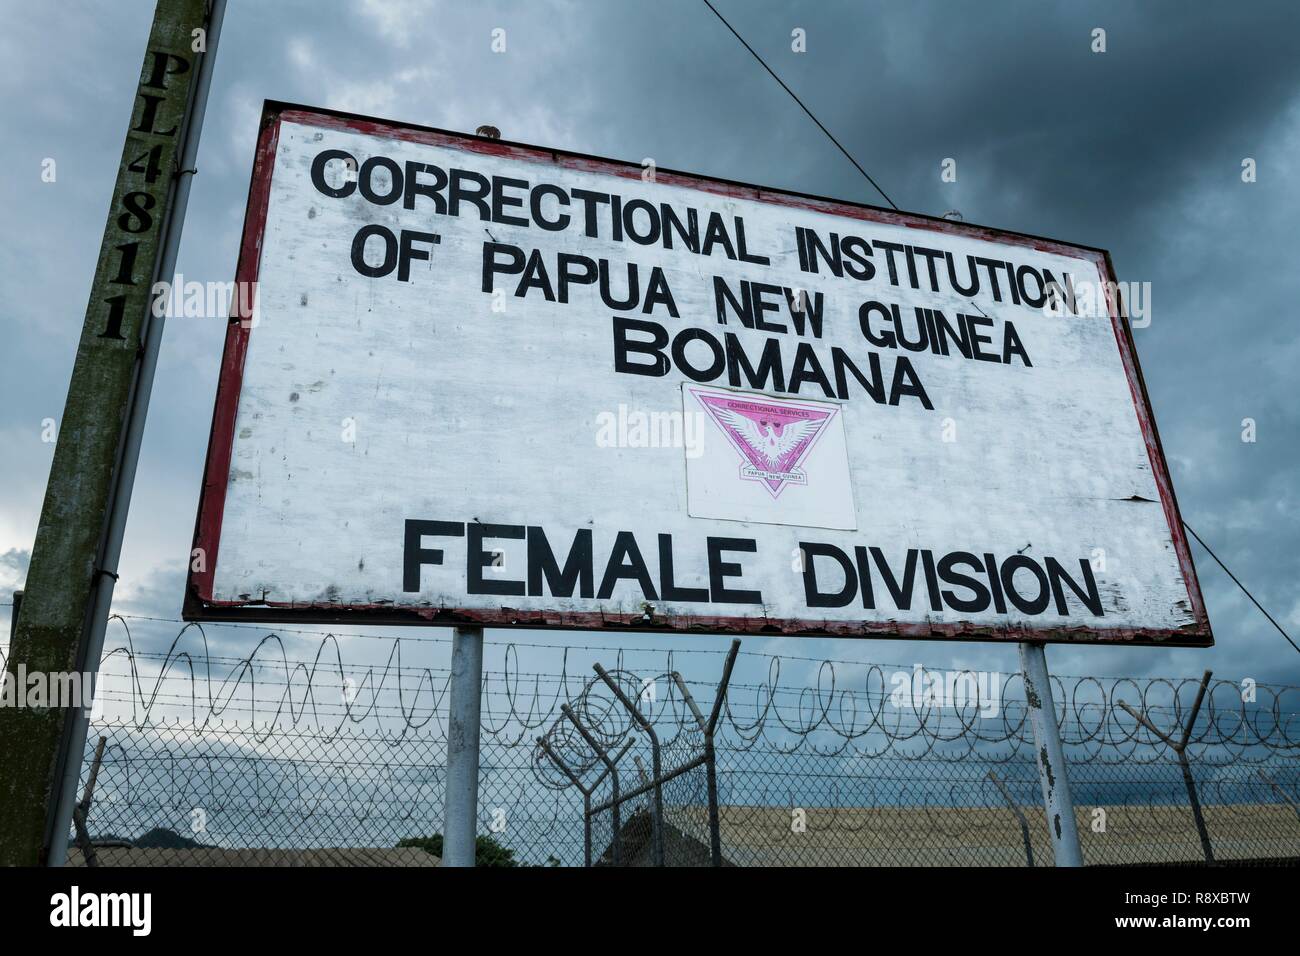 Papua Nuova Guinea, Golfo di Papua, Capitale Nazionale di Port Moresby, città di Bomana carcere femminile scheda di divisione Foto Stock